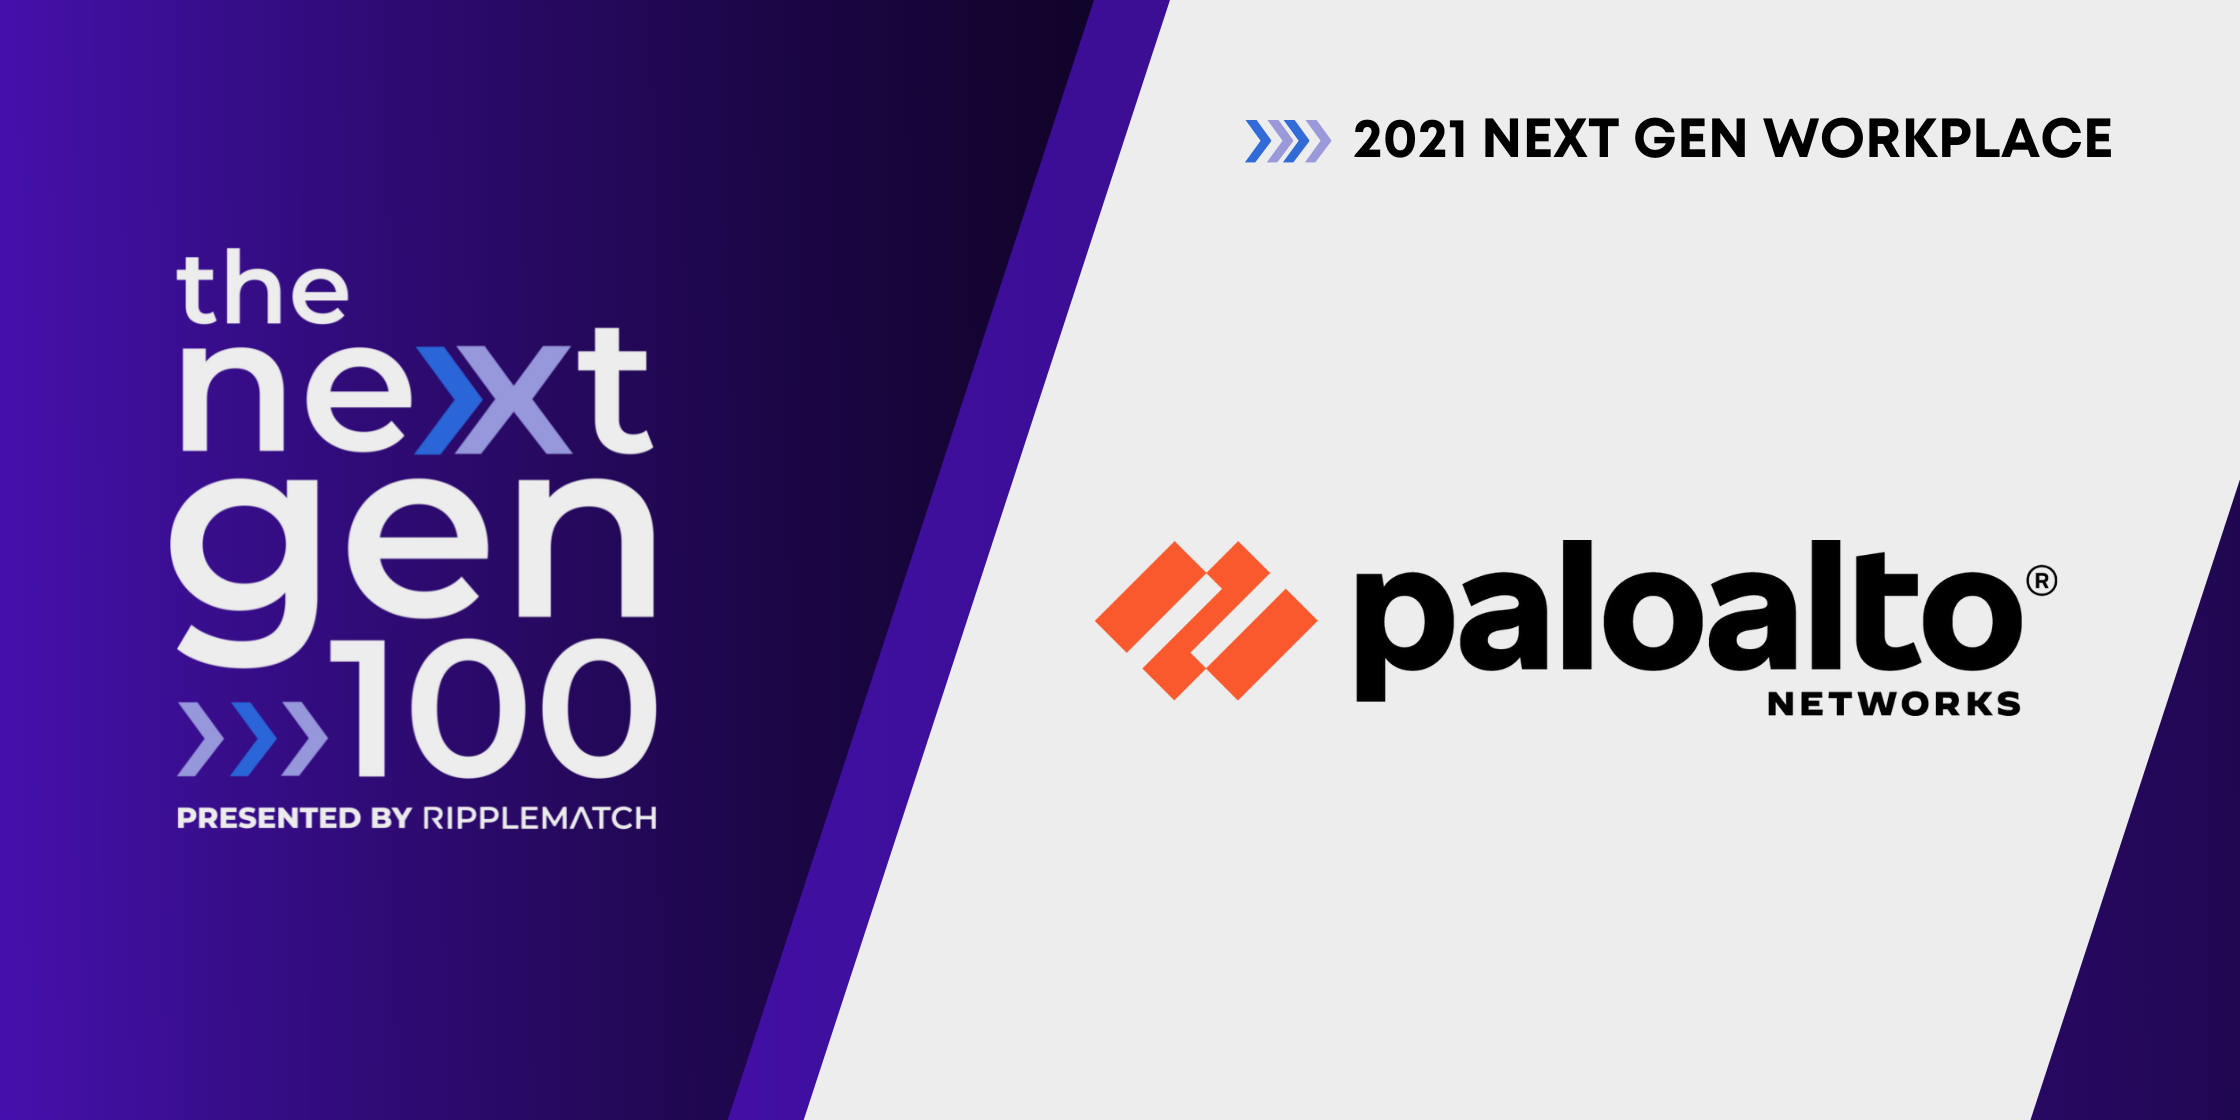 Palo Alto Networks is a Top 100 Next Gen Workplace 2021